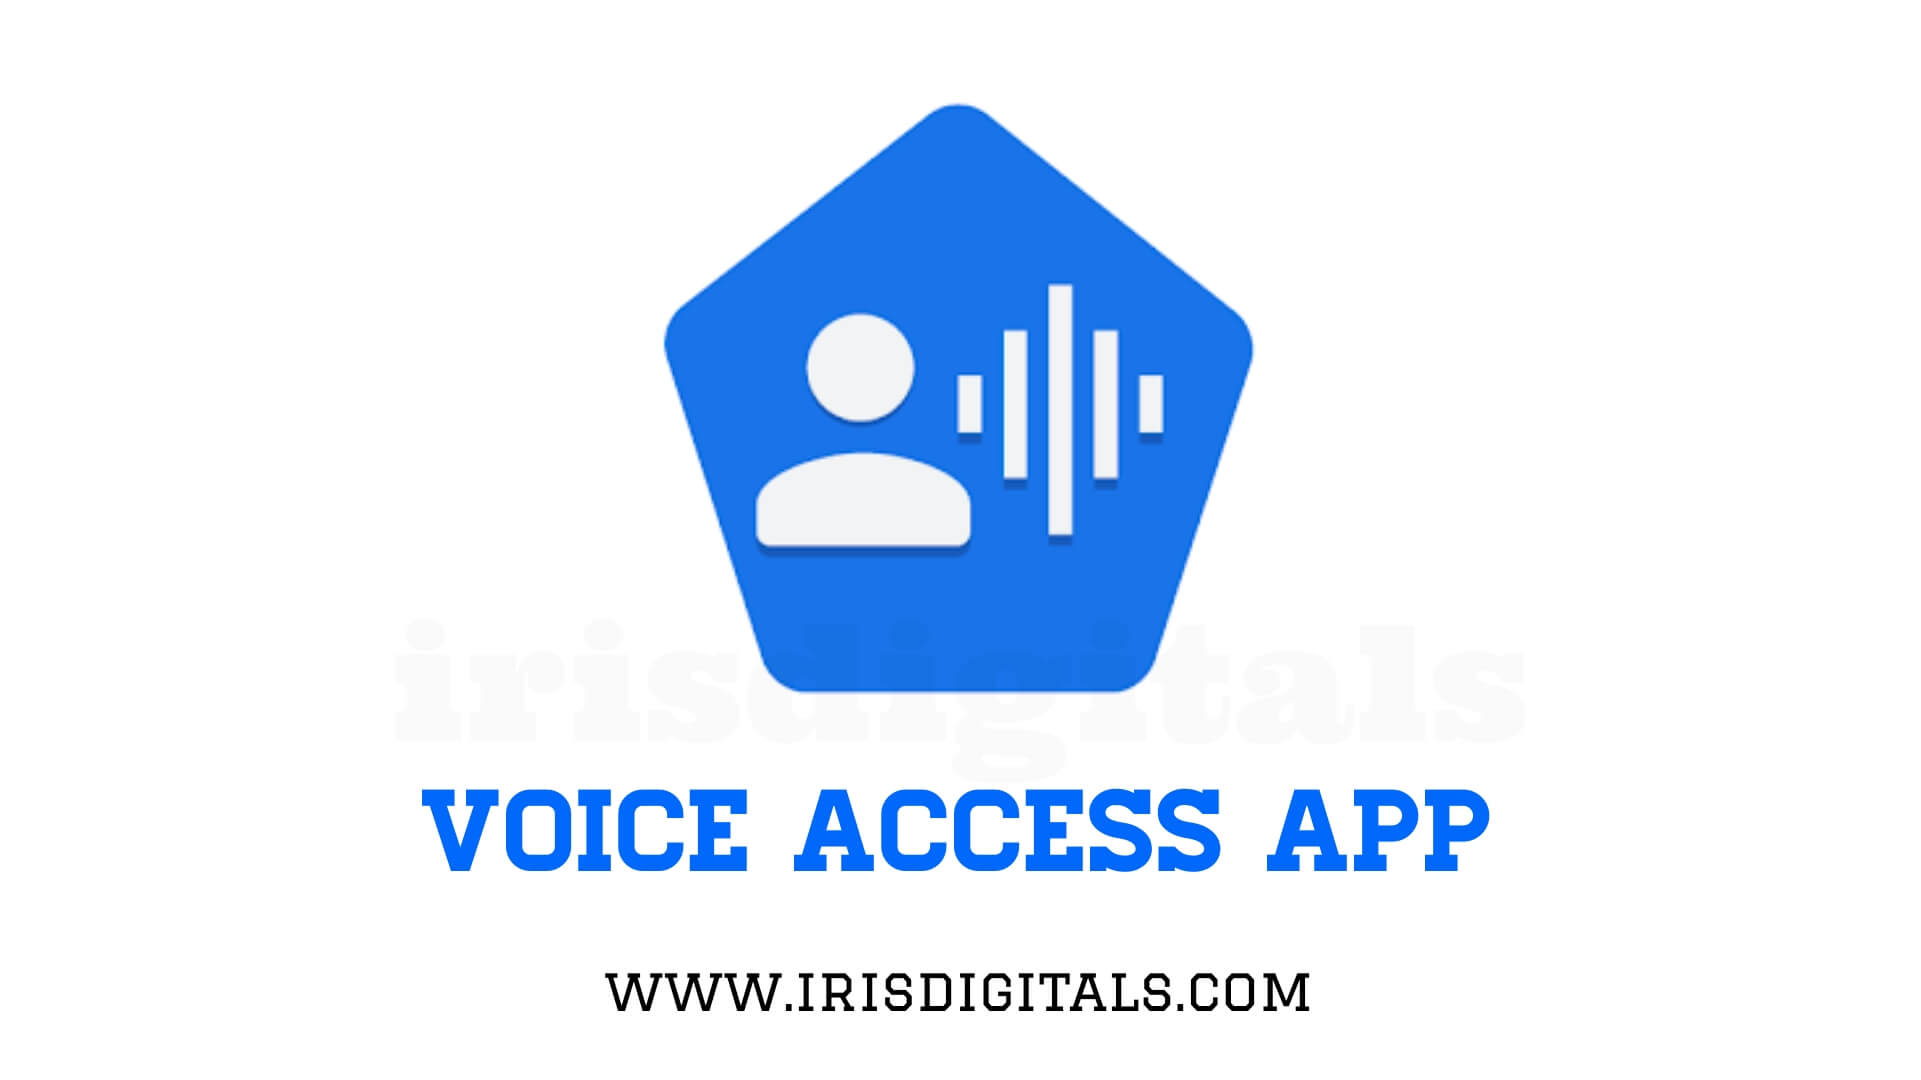 Voice access app by Google